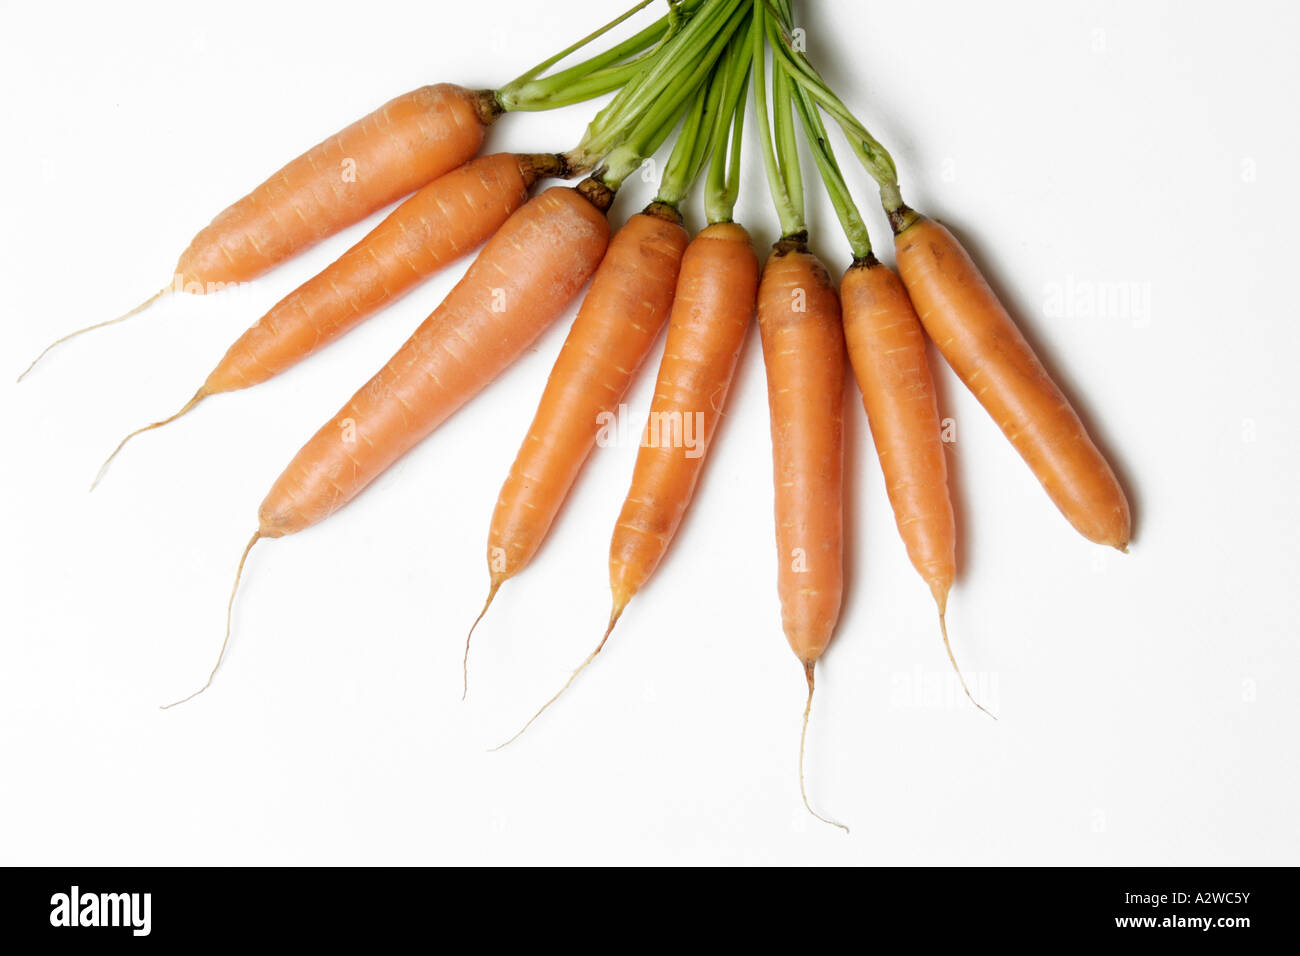 bunch of fresh carrots Stock Photo